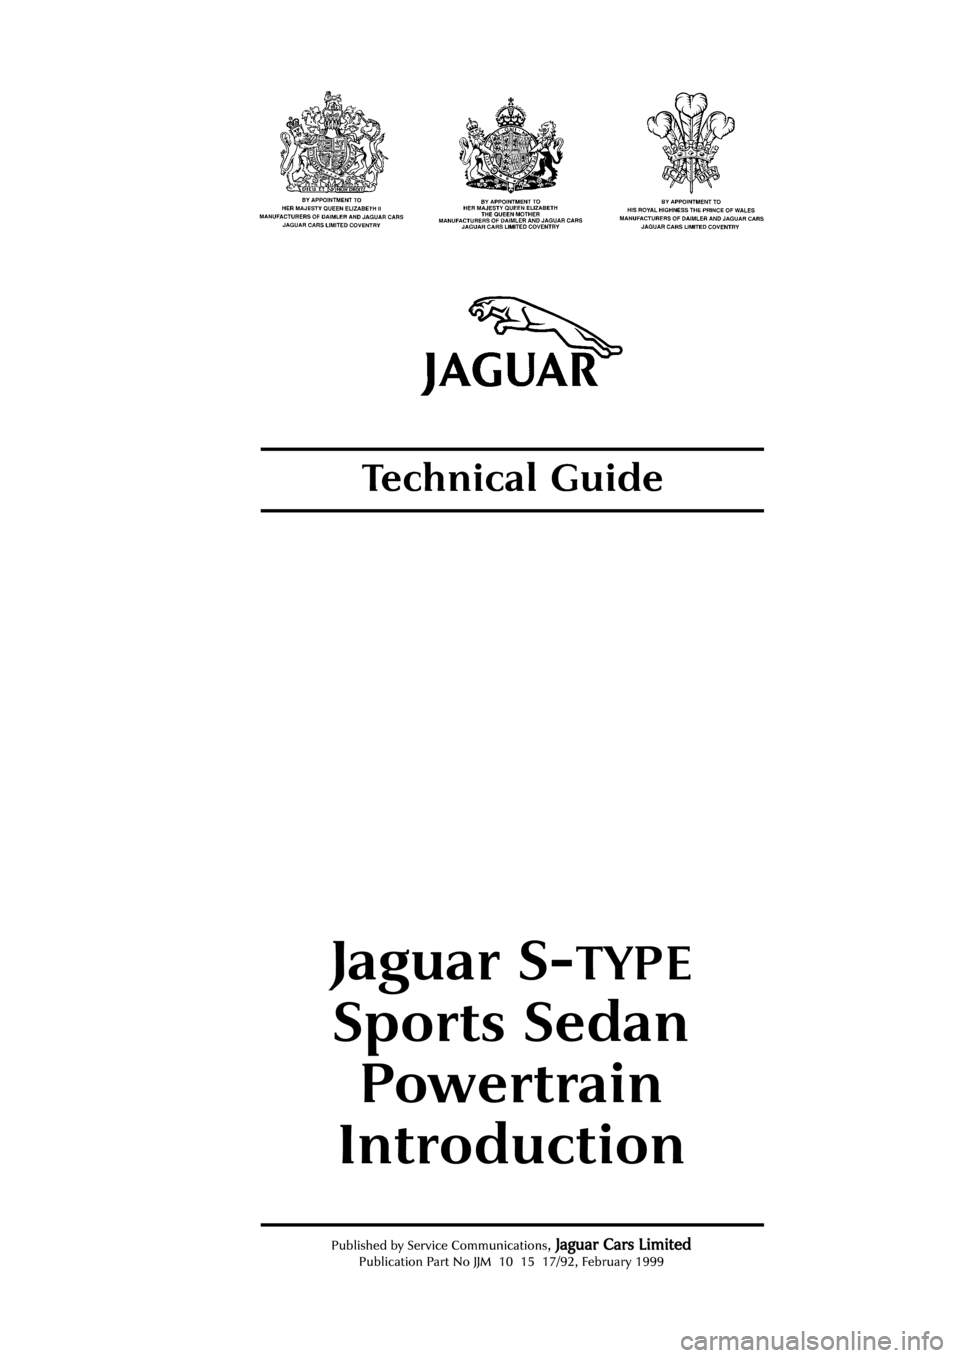 JAGUAR S TYPE 1999 1.G Powertrain Manual Published by Service Communications, J Ja
ag
gu
ua
ar
r 
 C
Ca
ar
rs
s 
 L
Li
im
mi
it
te
ed
d
Publication Part No JJM 10 15 17/92, February 1999
Technical Guide
Jaguar S-TYPE
Sports Sedan
Powertrain
